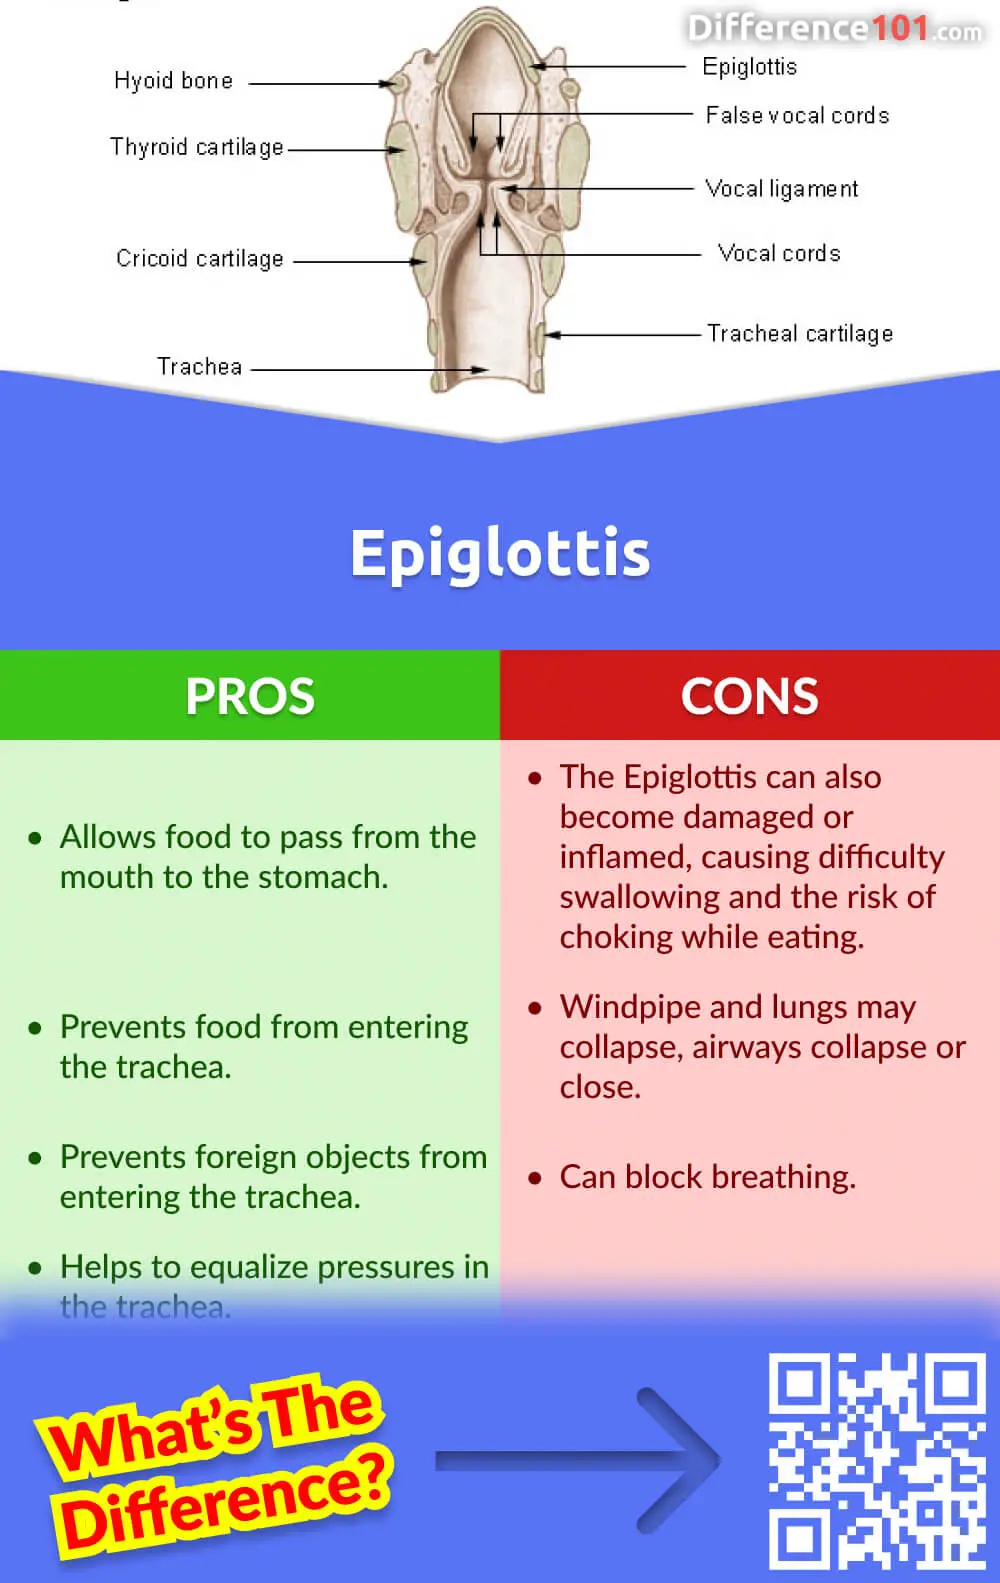 Epiglottis Pros & Cons
